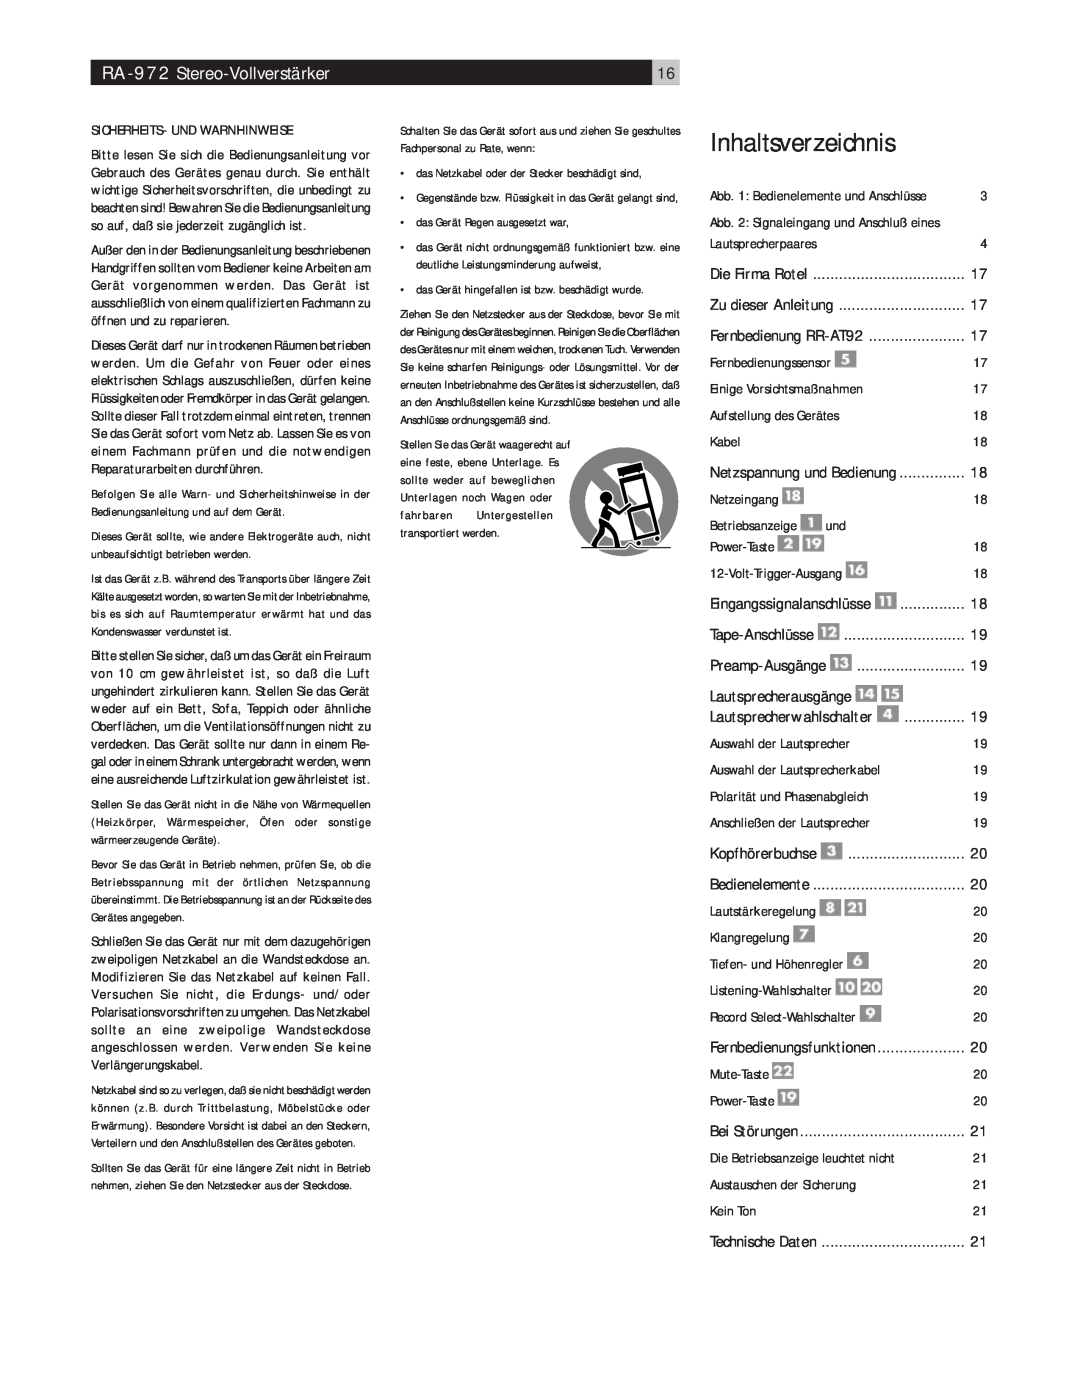 Rotel owner manual Inhaltsverzeichnis, RA-972 Stereo-Vollverstärker, Lautsprecherausgänge 